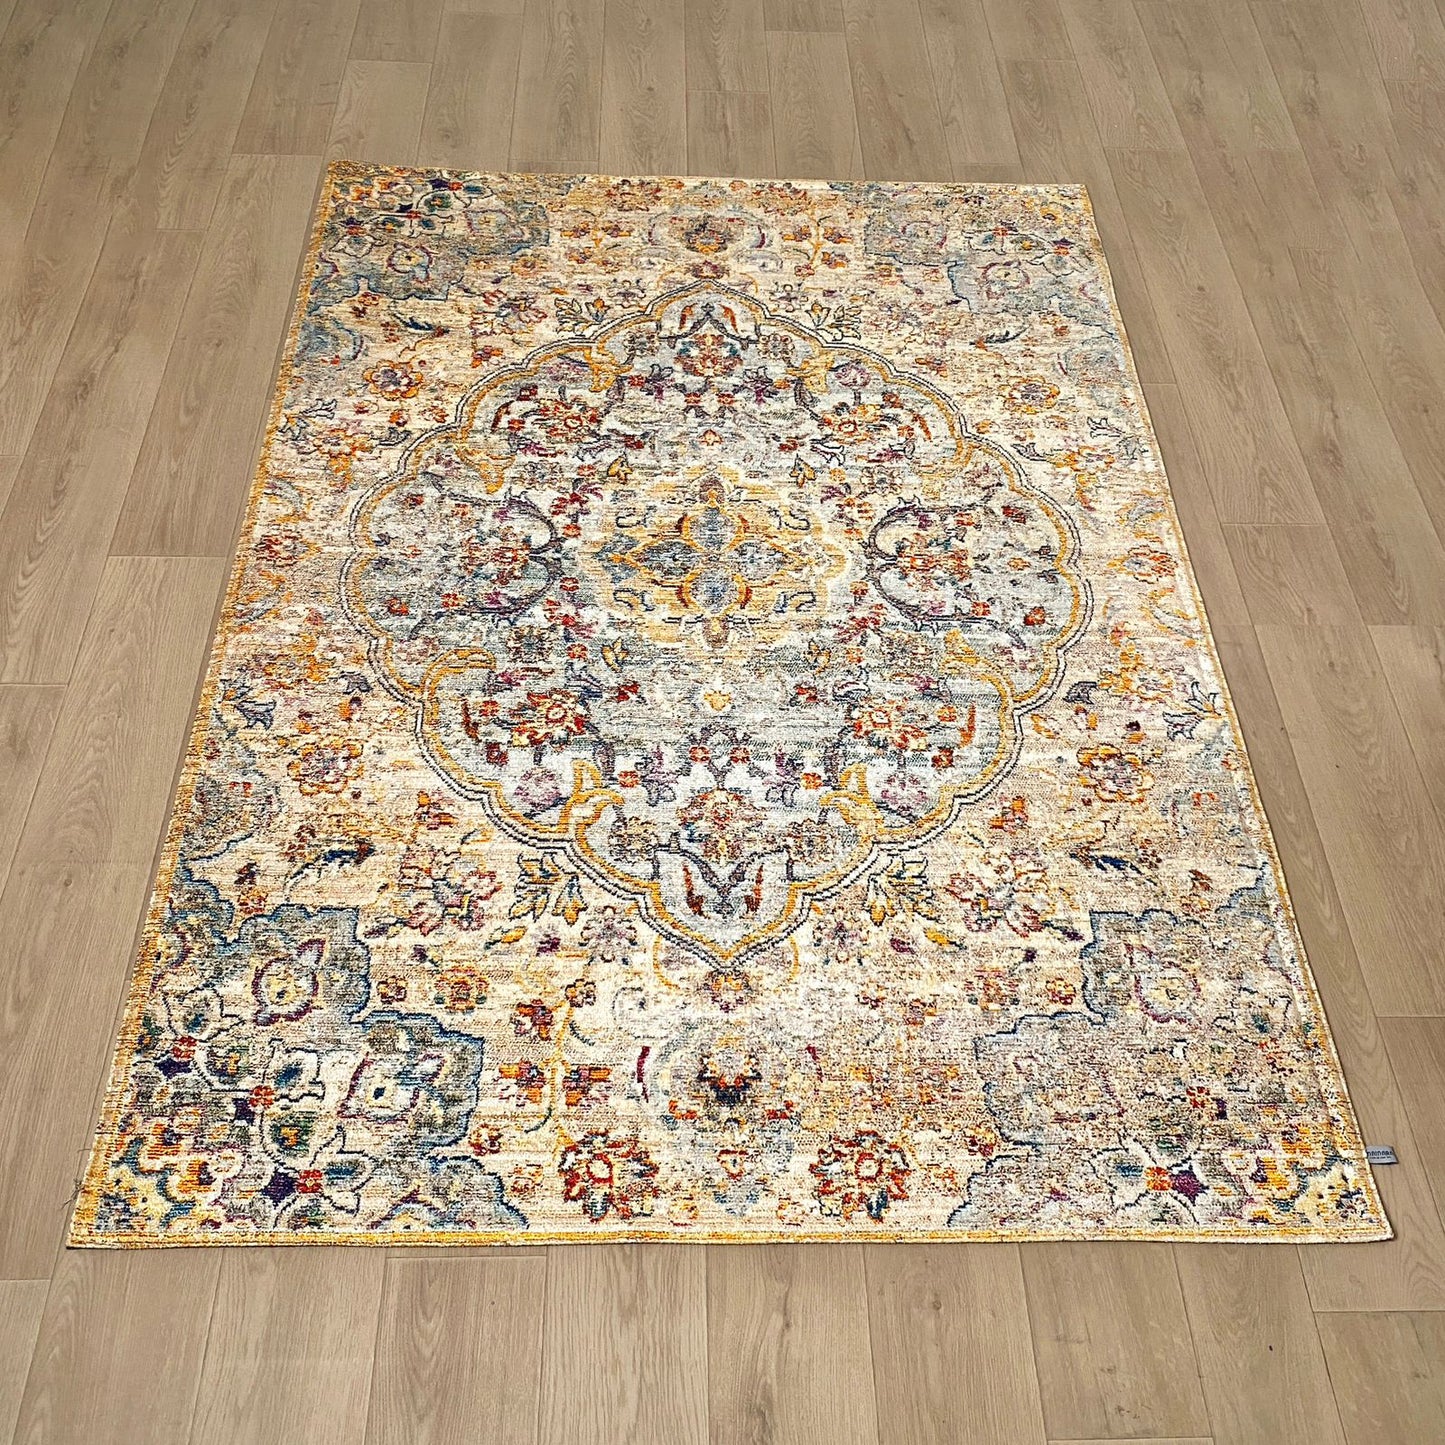 Karpet Tradisional (BR-T-0012) - Brown,Blue,Cream